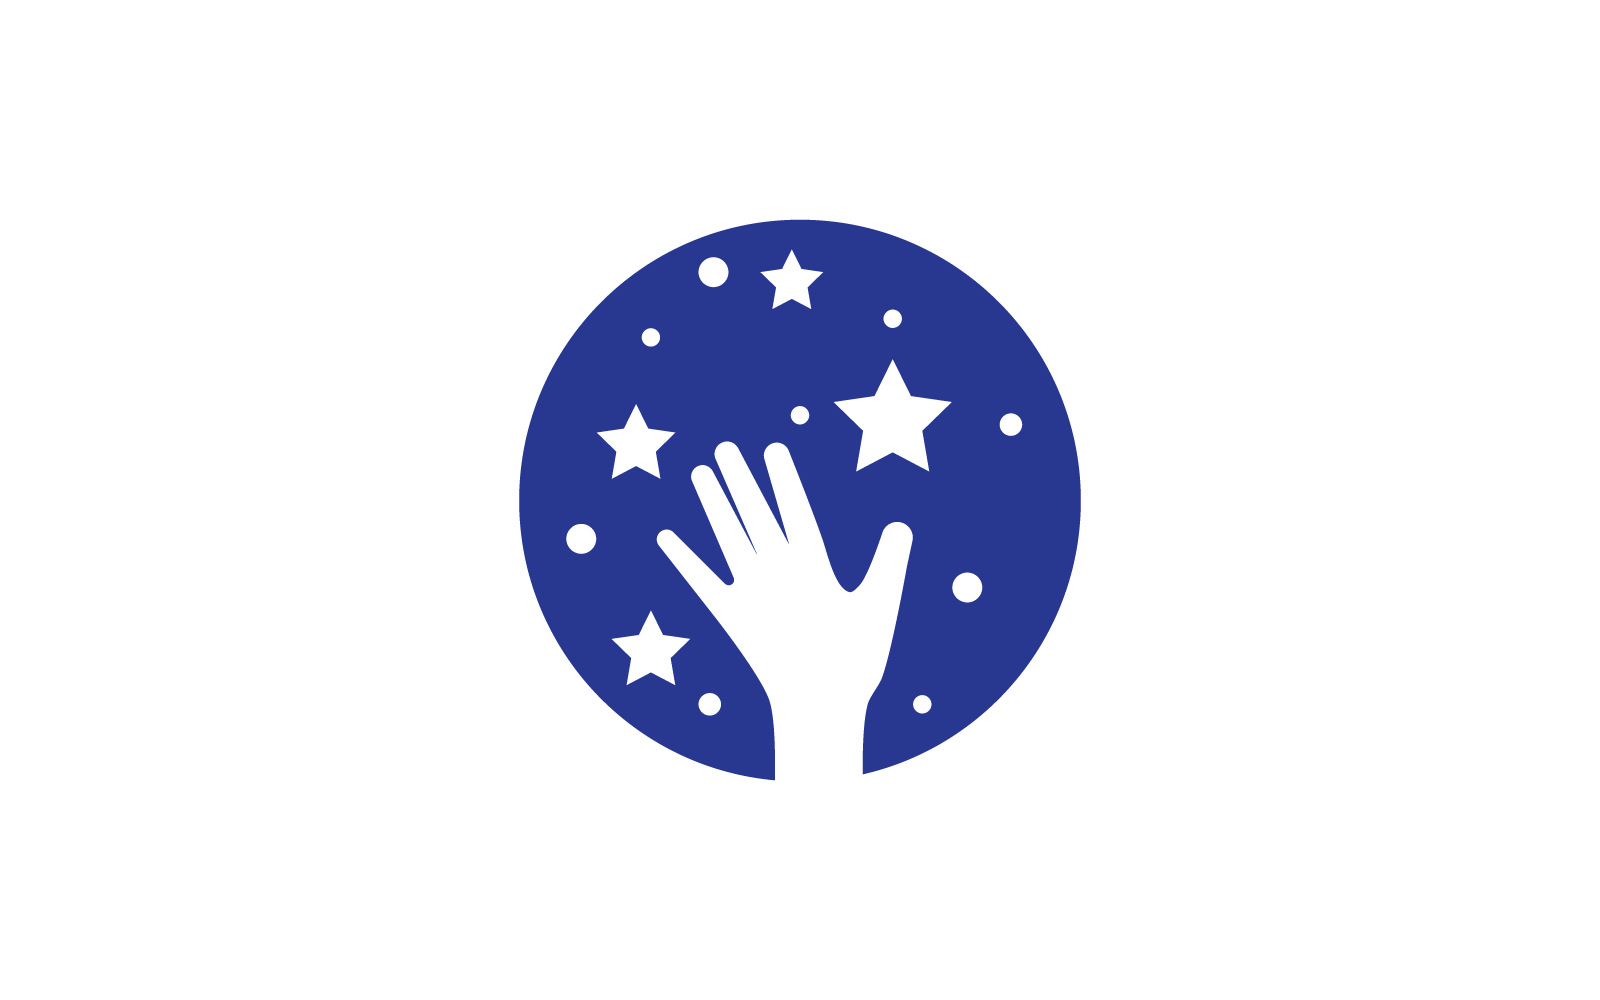 Hand and star logo illustration vector icon design